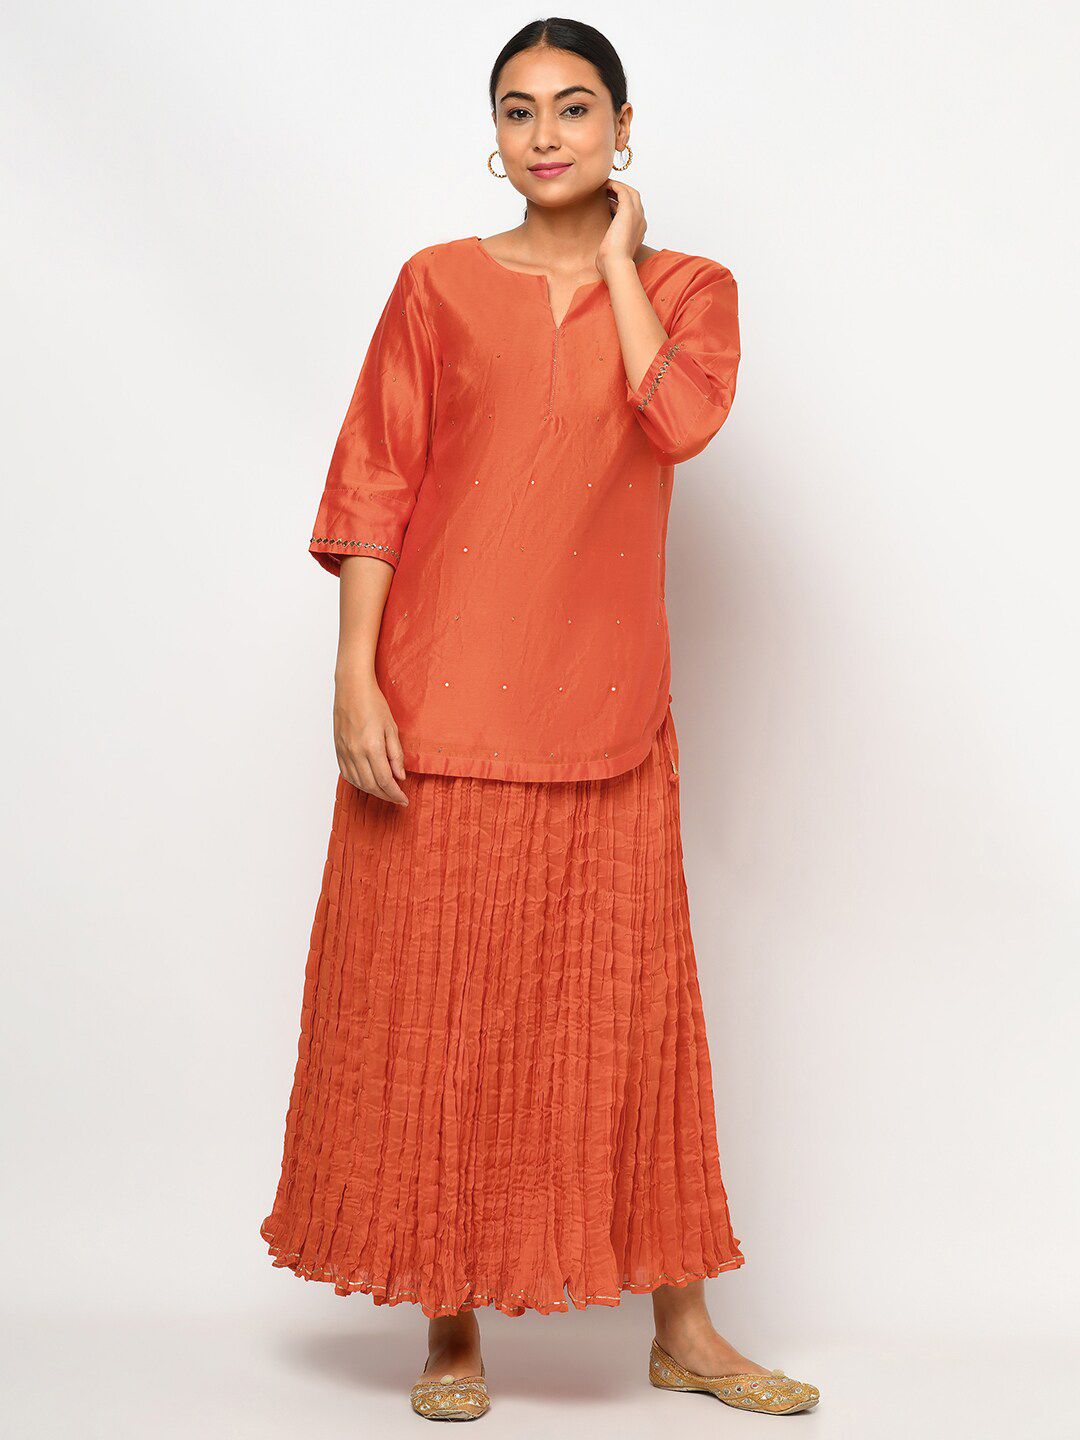 Fabindia Women Orange & Gold-Toned Embellished Tunic with Skirt Price in India